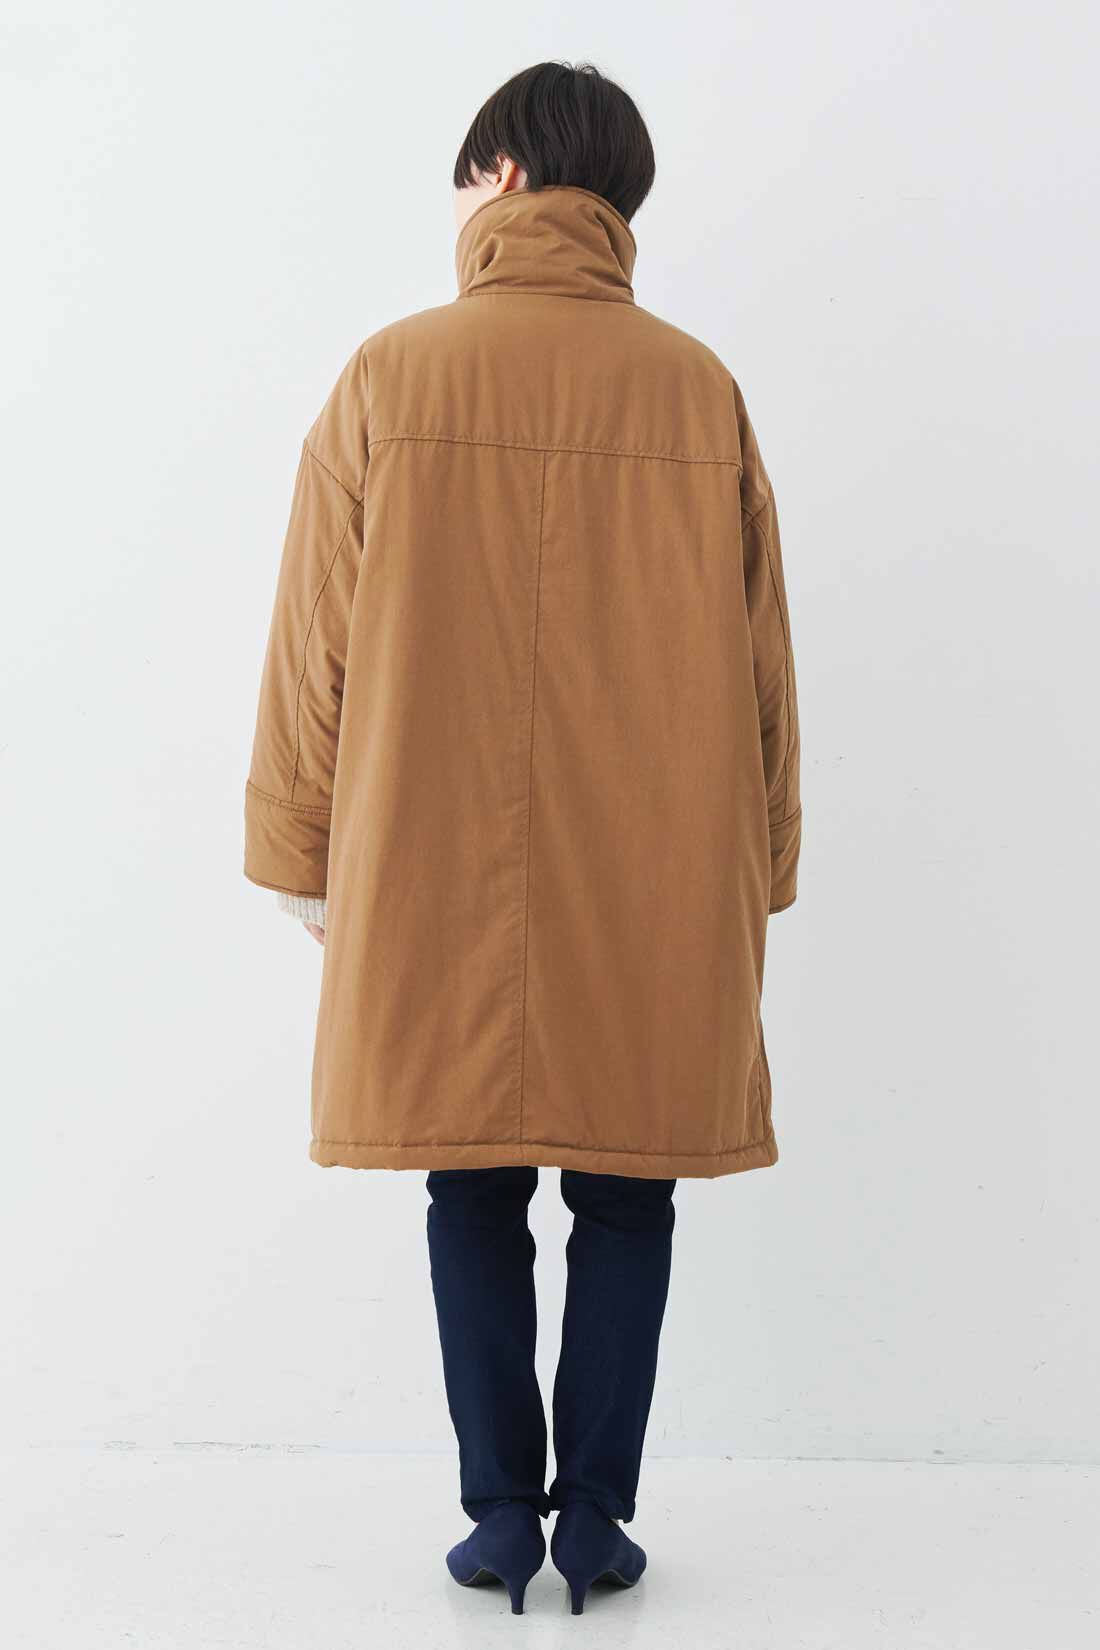 MEDE19F|MEDE19F　オーバーサイズミリタリージャケットコート〈ベージュ〉|身長152cm（2サイズ着用）